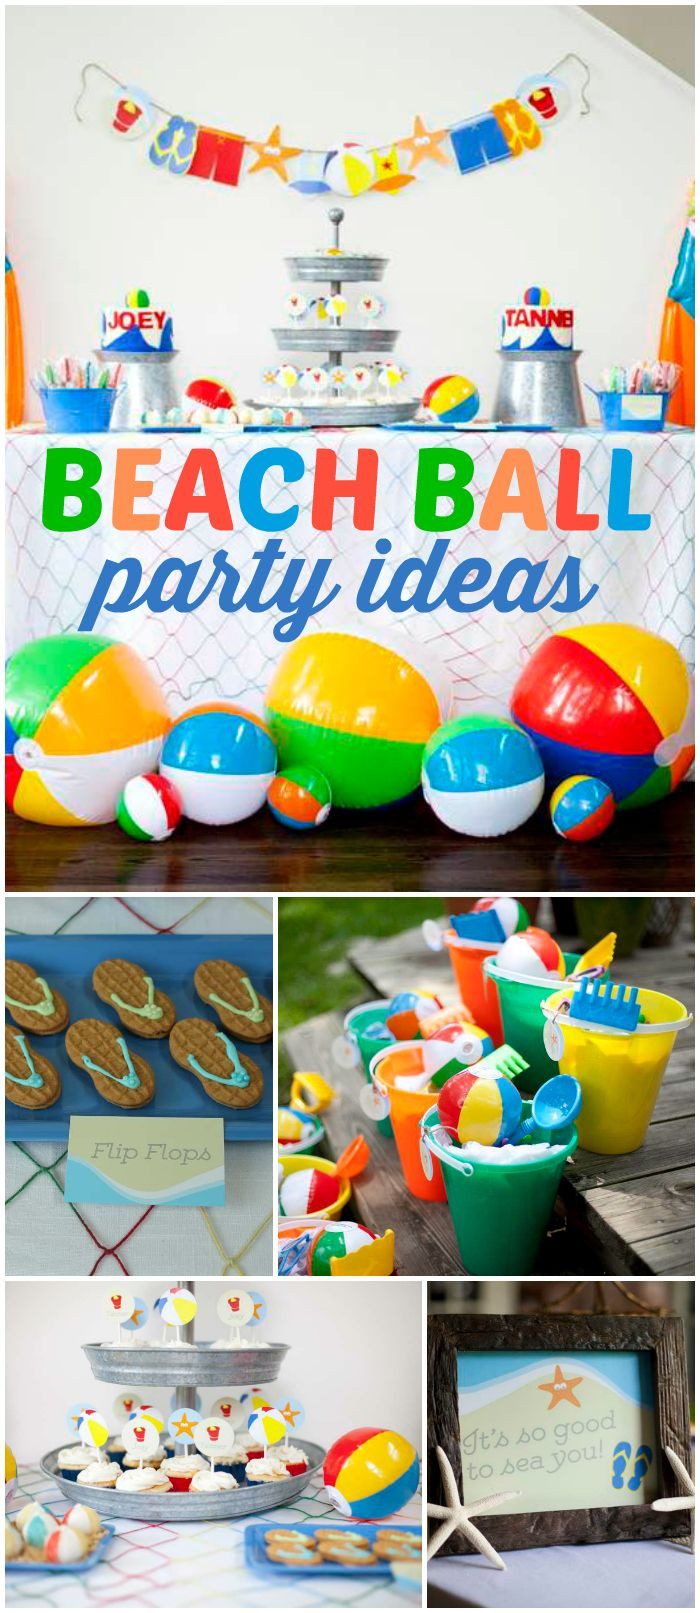 Beach Theme Party Ideas For Kids
 Best 25 Kids beach party ideas on Pinterest